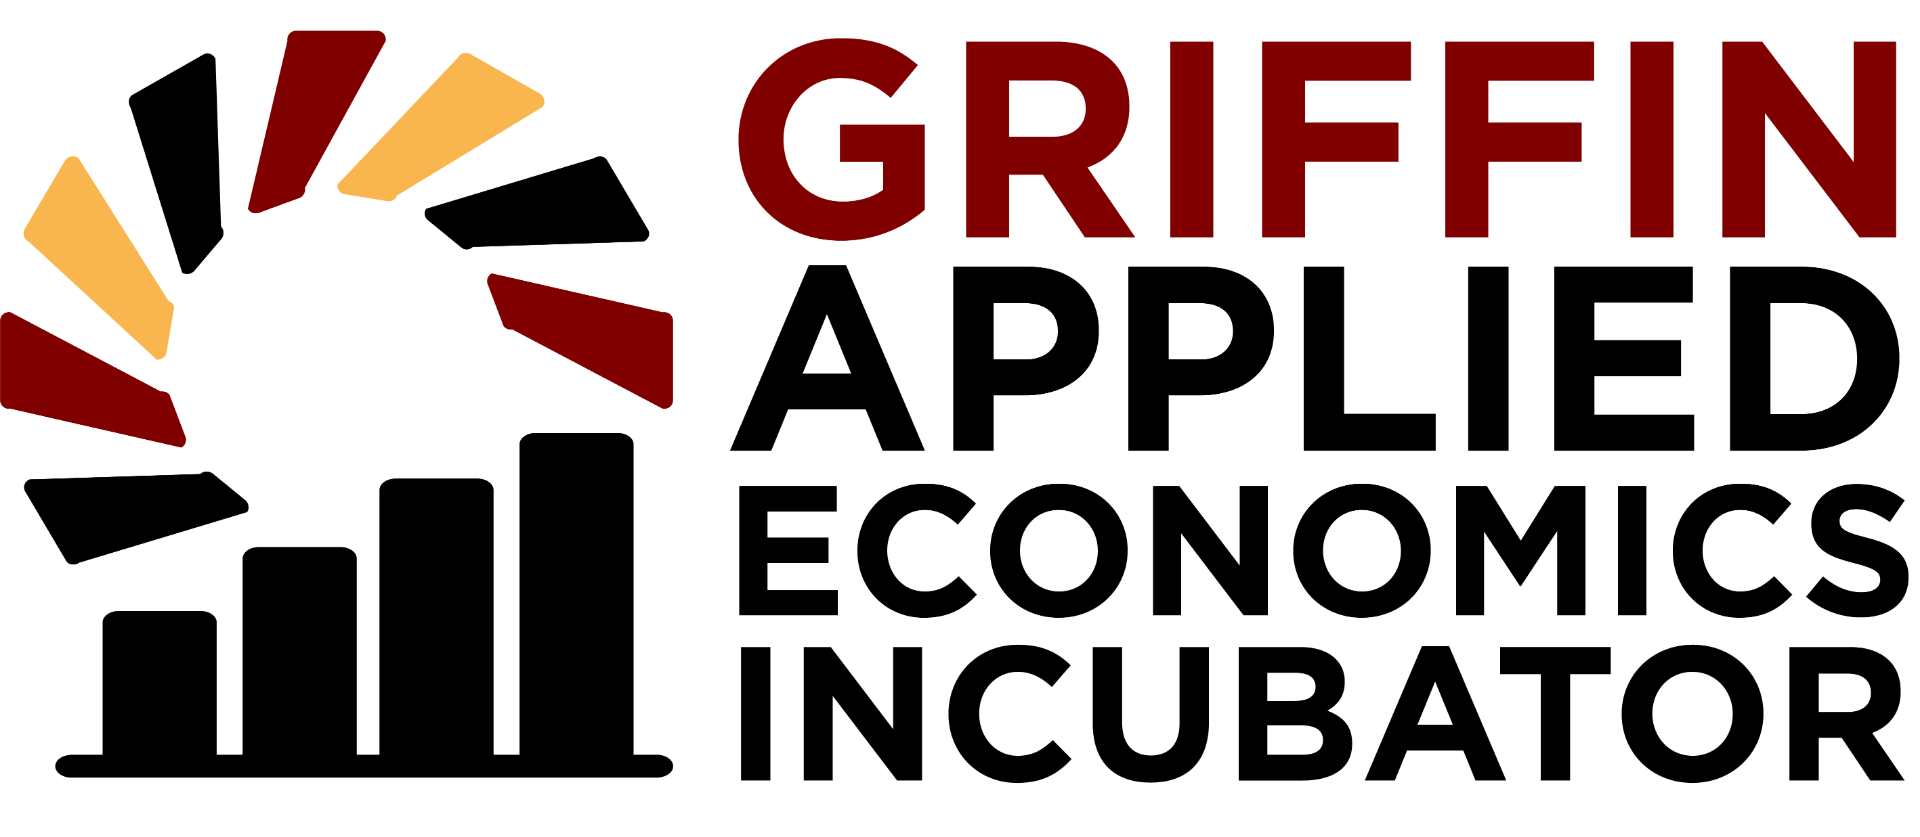 Griffin Applied Economics Incubator